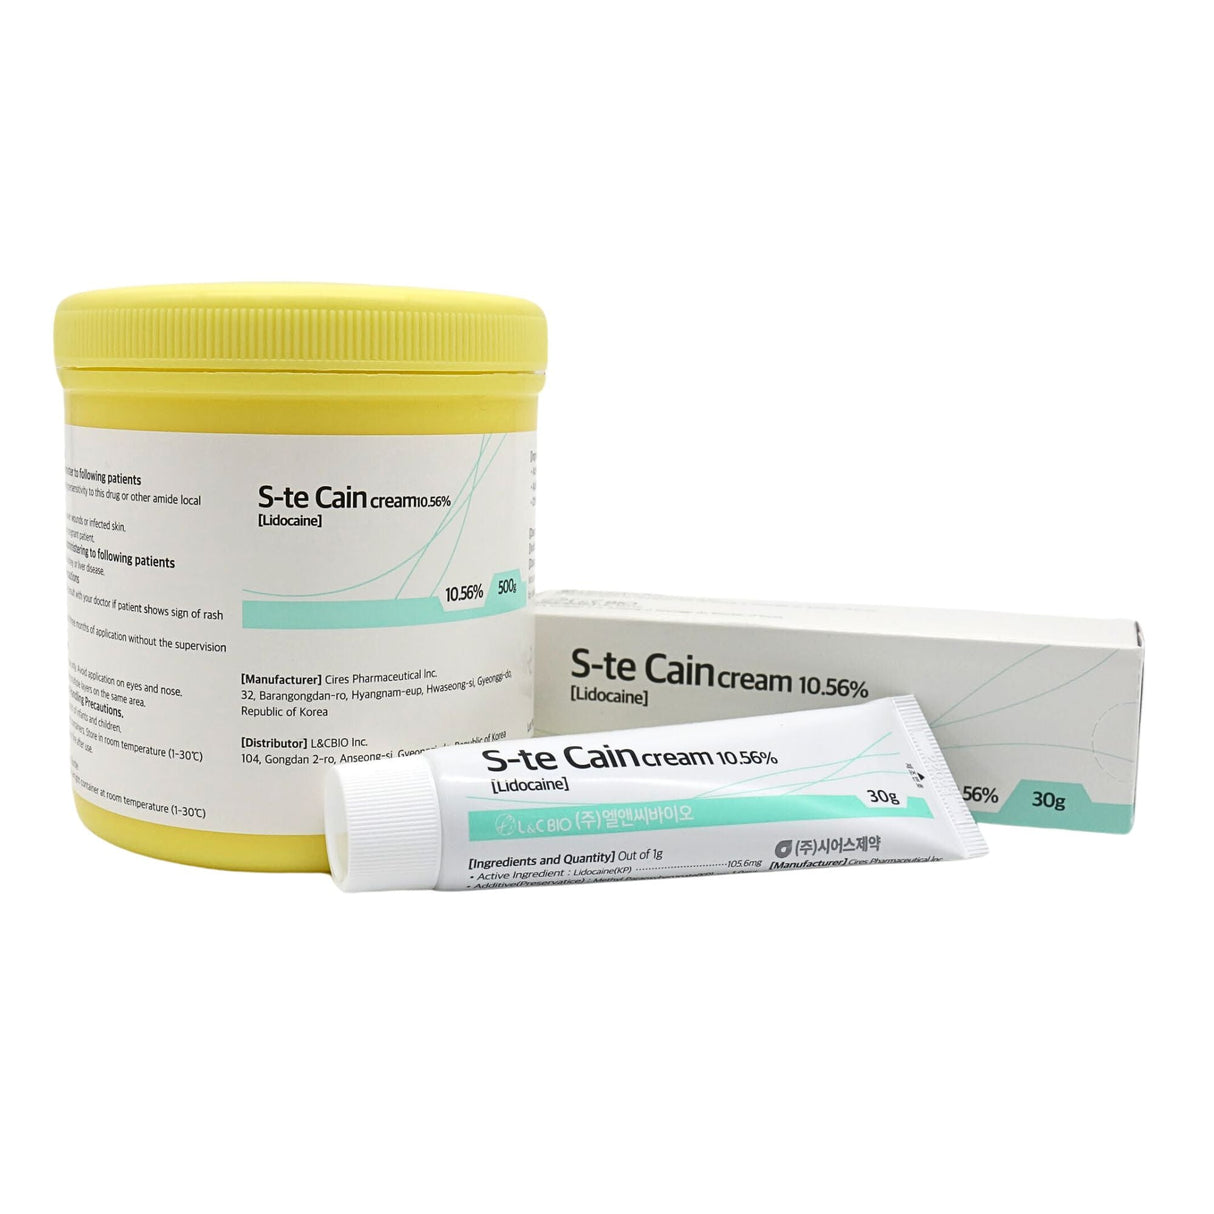 S-te Cain Lidocaine Cream 10.56% 30g - Filler Lux™ - Anesthetic Cream - Let It beauty Co., Ltd.